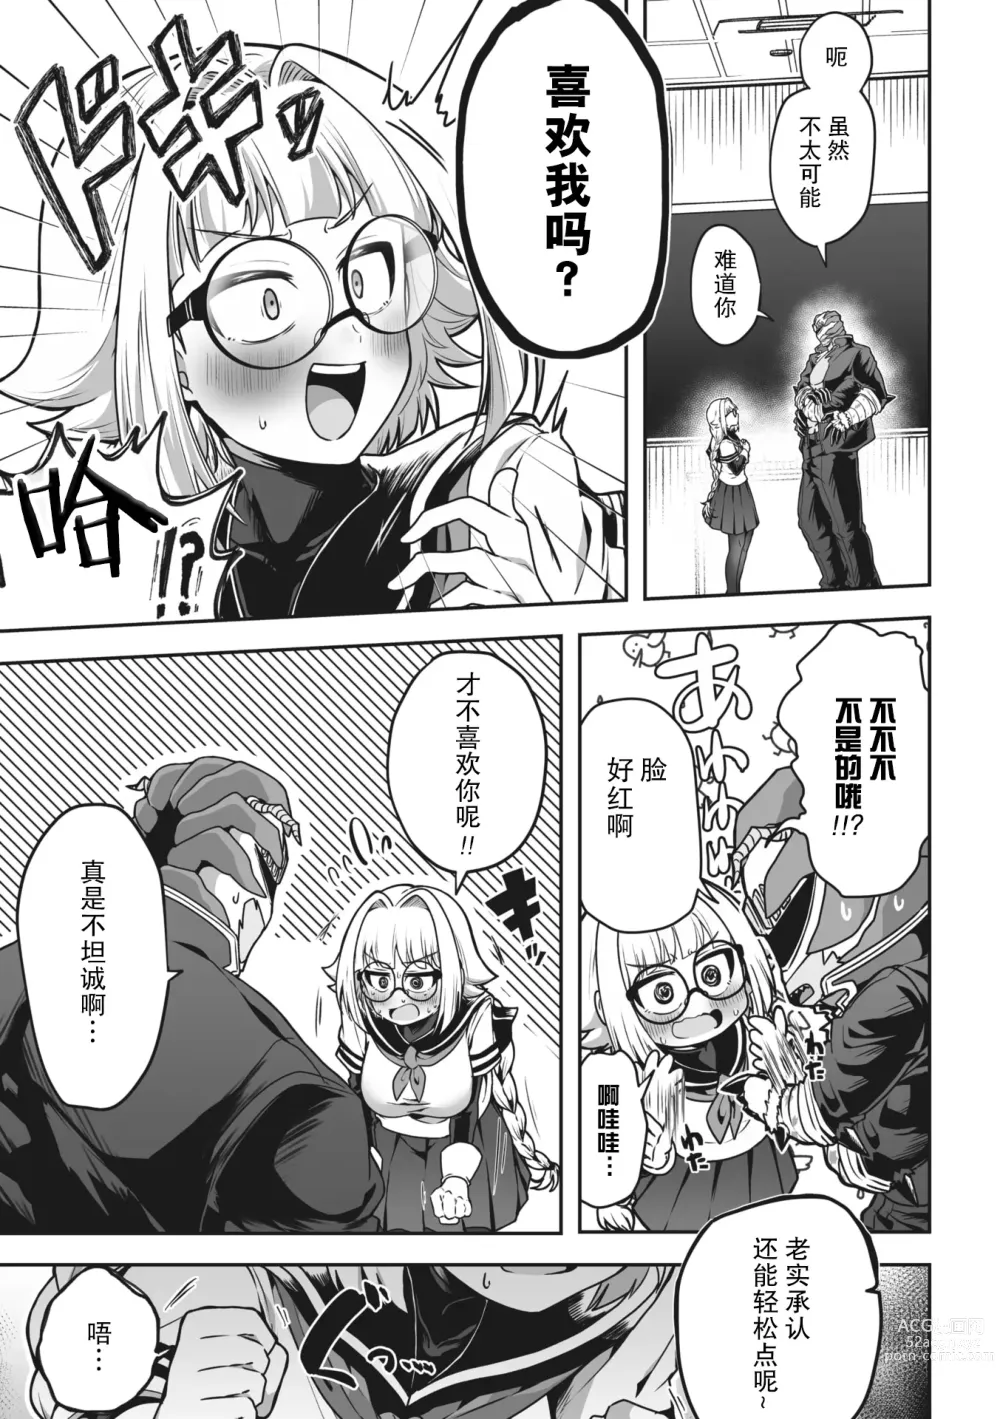 Page 6 of manga 请把衣服穿整齐了！